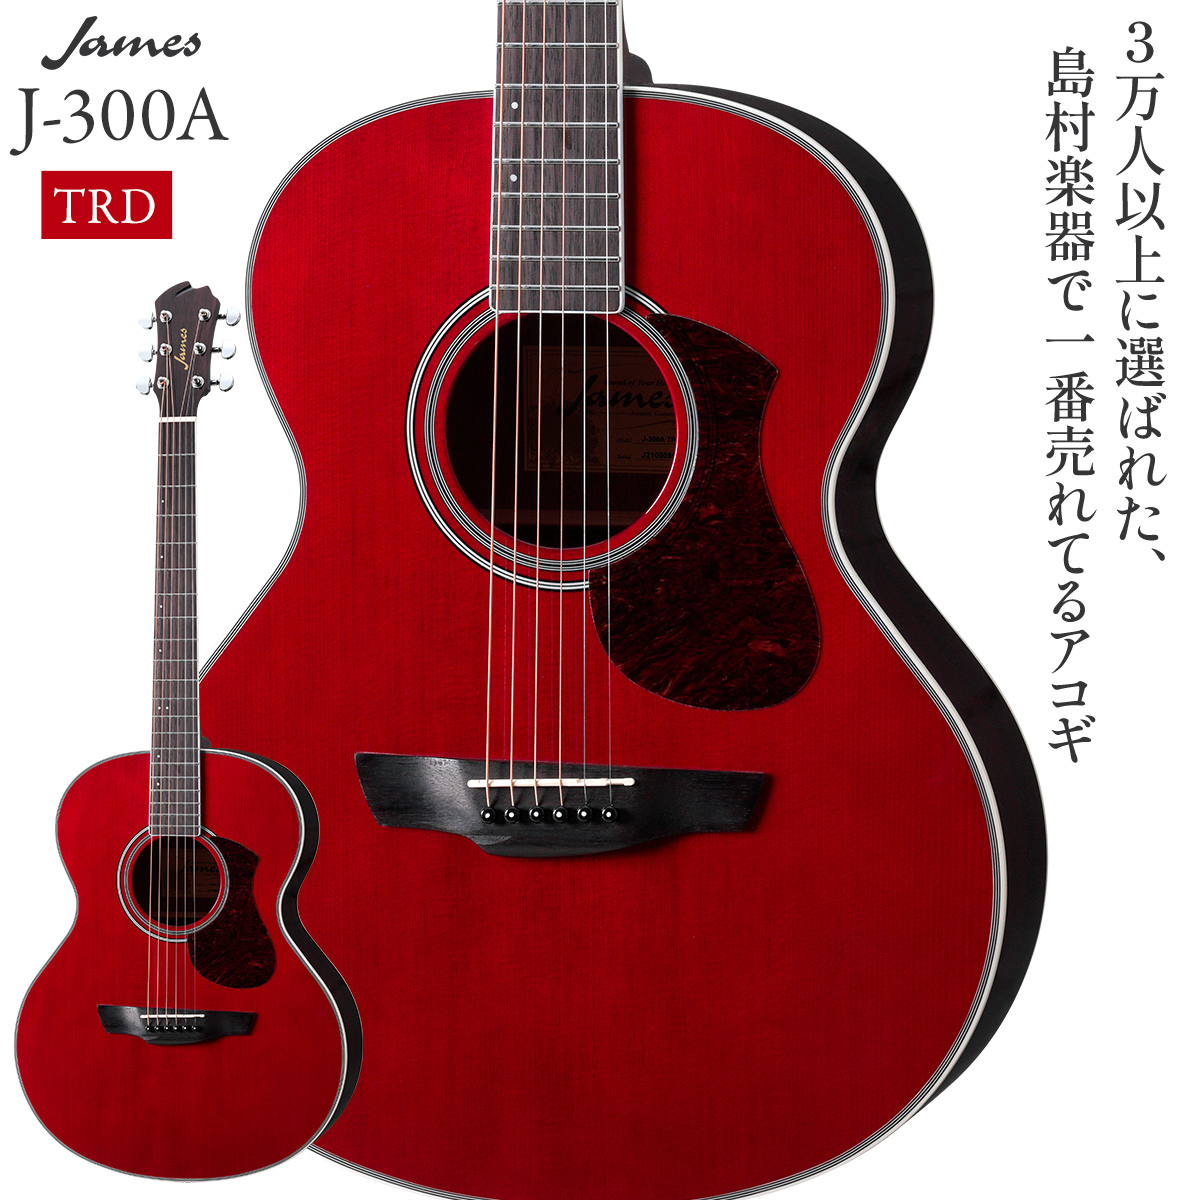 【6606】 James j-300a アコースティックギター